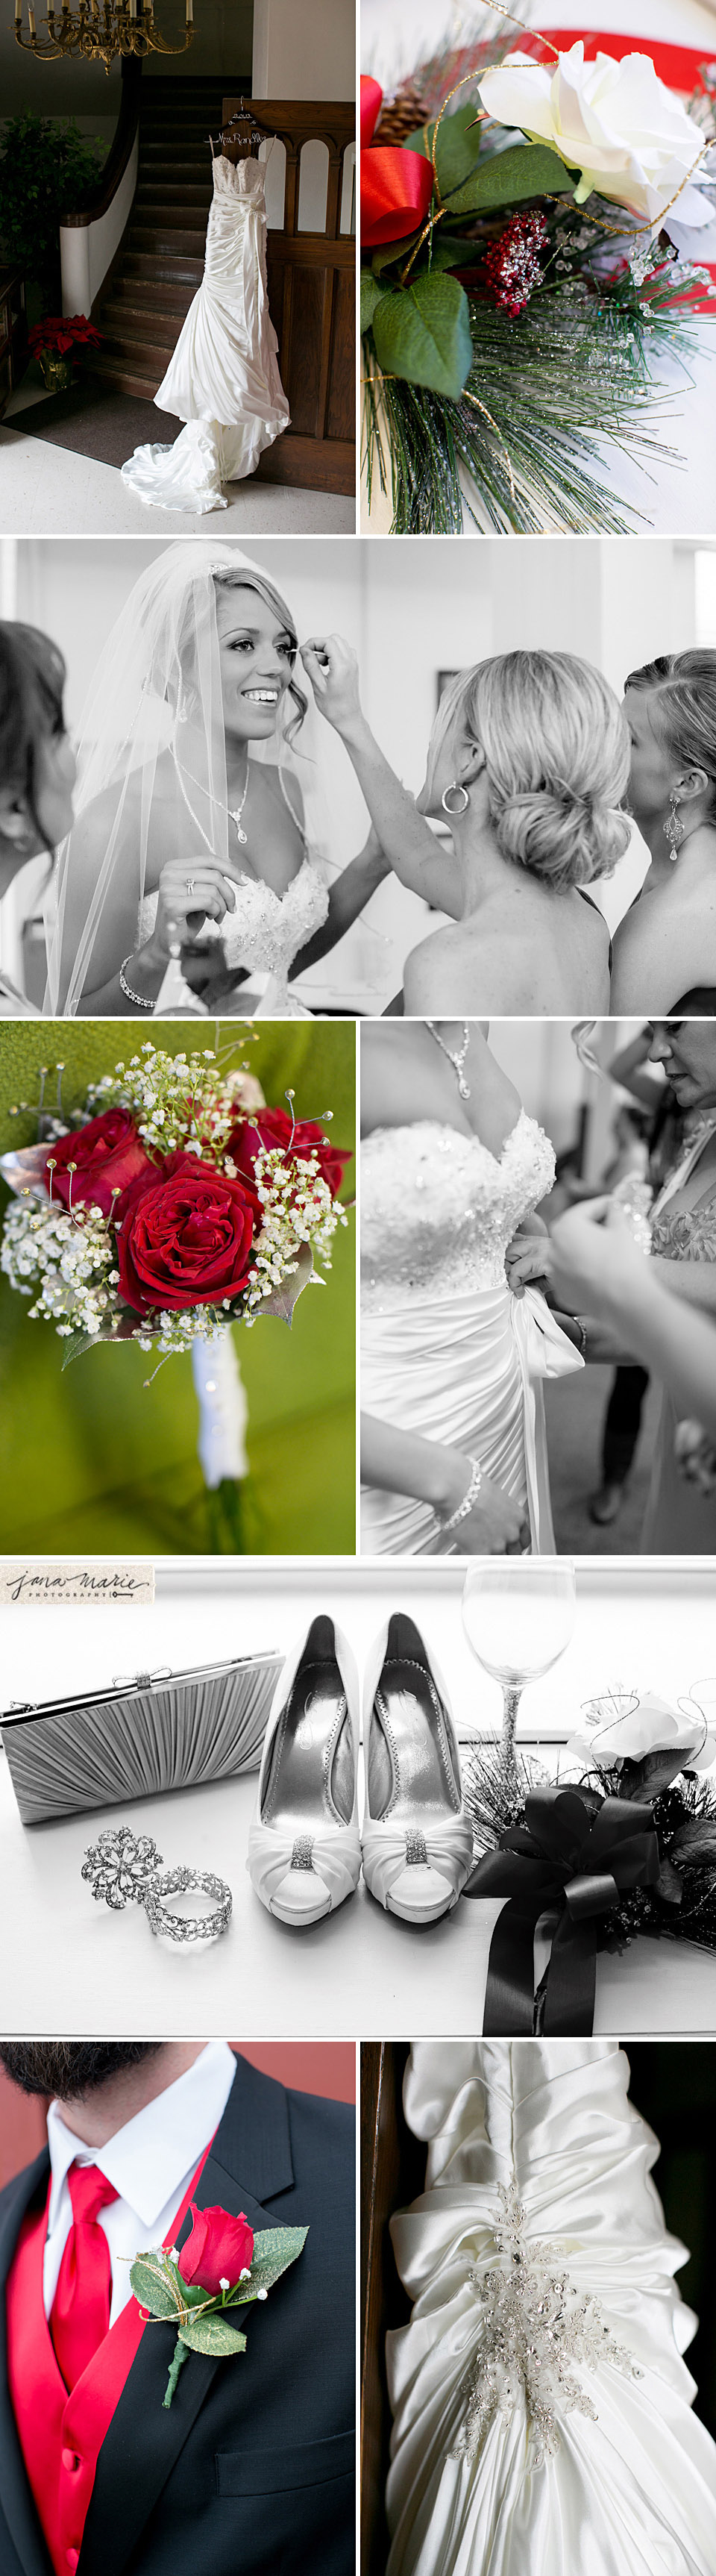 Kansas City wedding photographer, Jana Marler, winter weddings, red roses, glitter